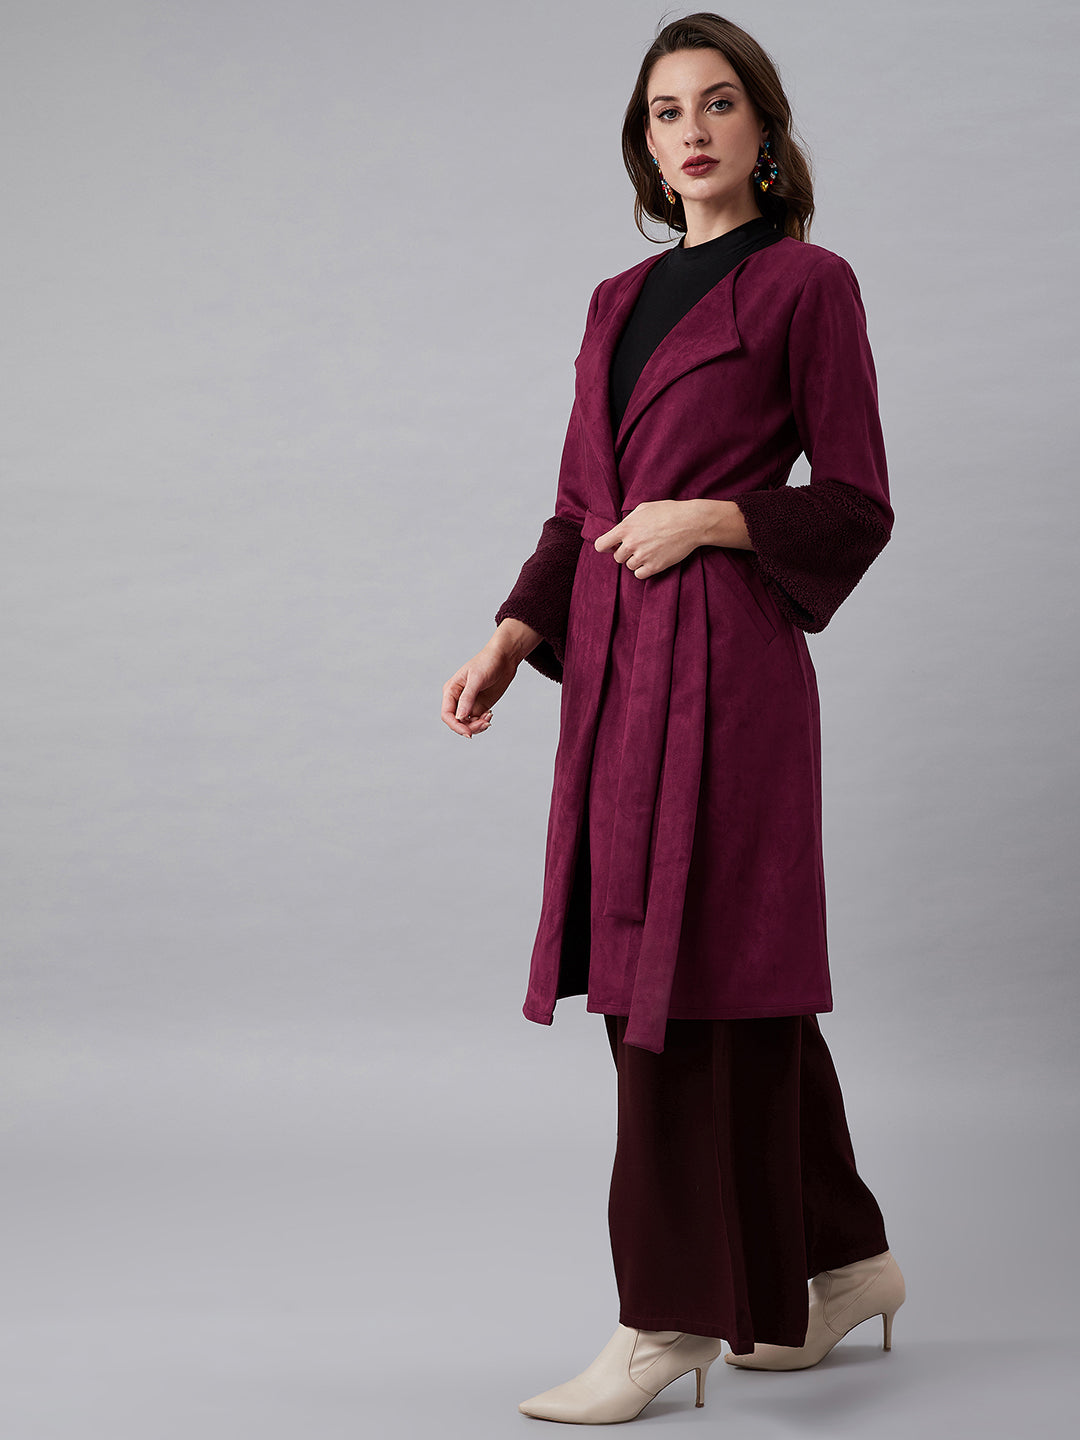 Athena Women Magenta Solid Suede Knee-Length Faux Fur Trim Wrap Coat - Athena Lifestyle